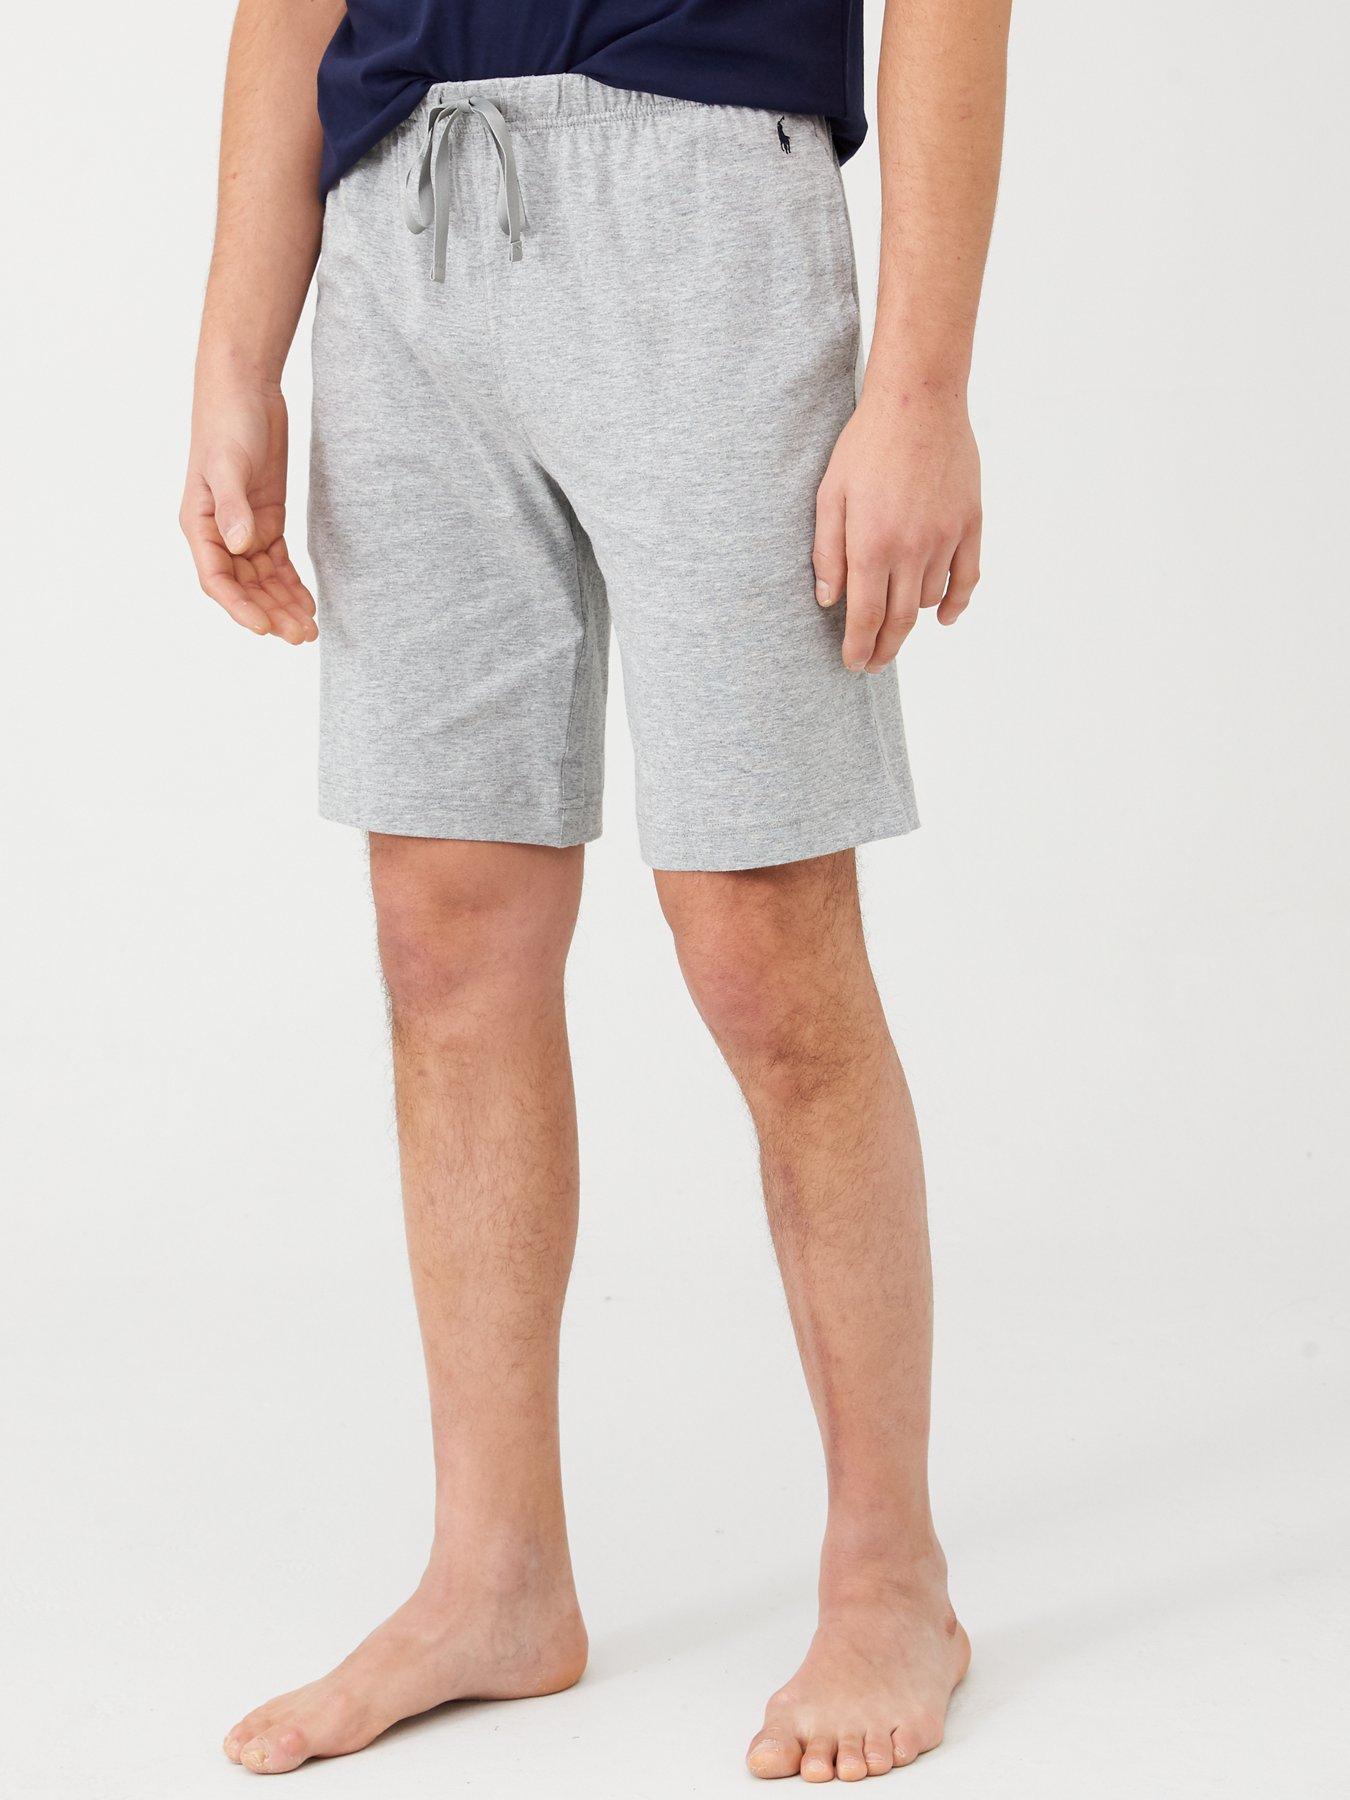 ralph lauren grey shorts